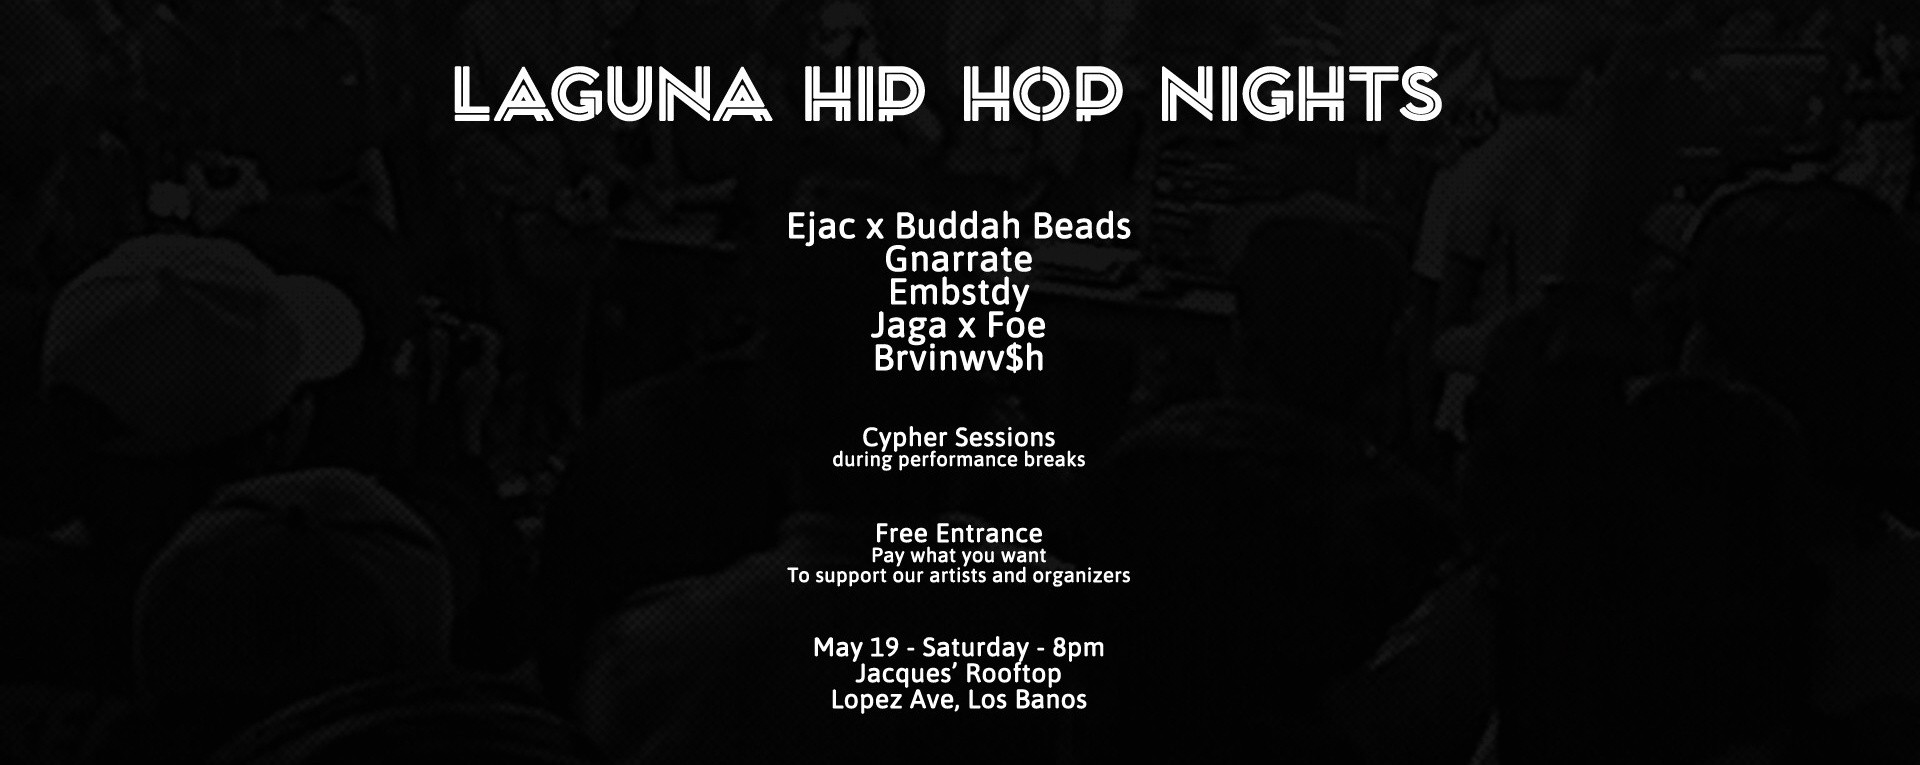 Laguna Hip Hop Nights